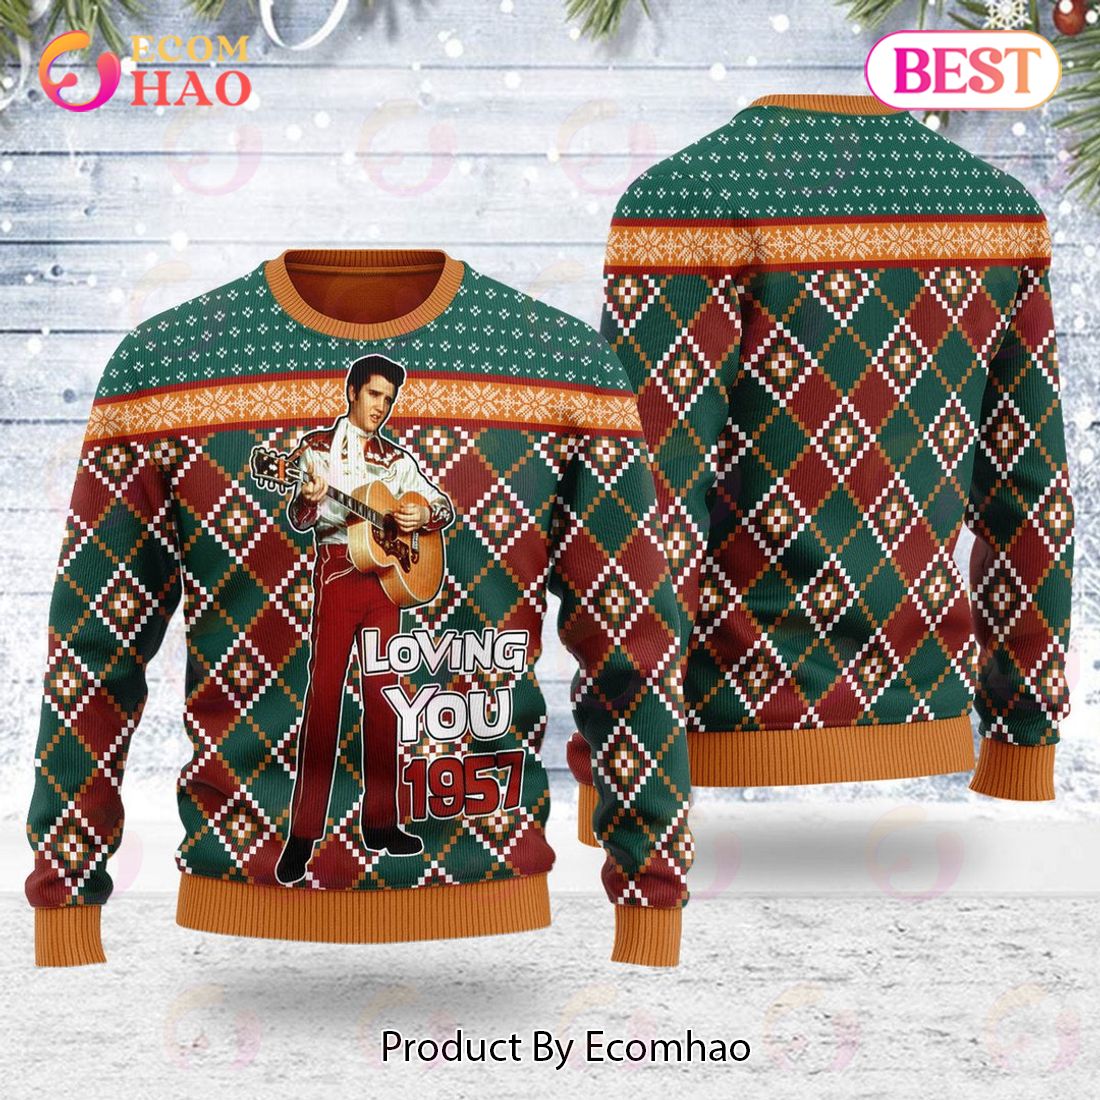 Elvis Presley 'Loving You' 1957 Christmas Ugly Sweatshirt